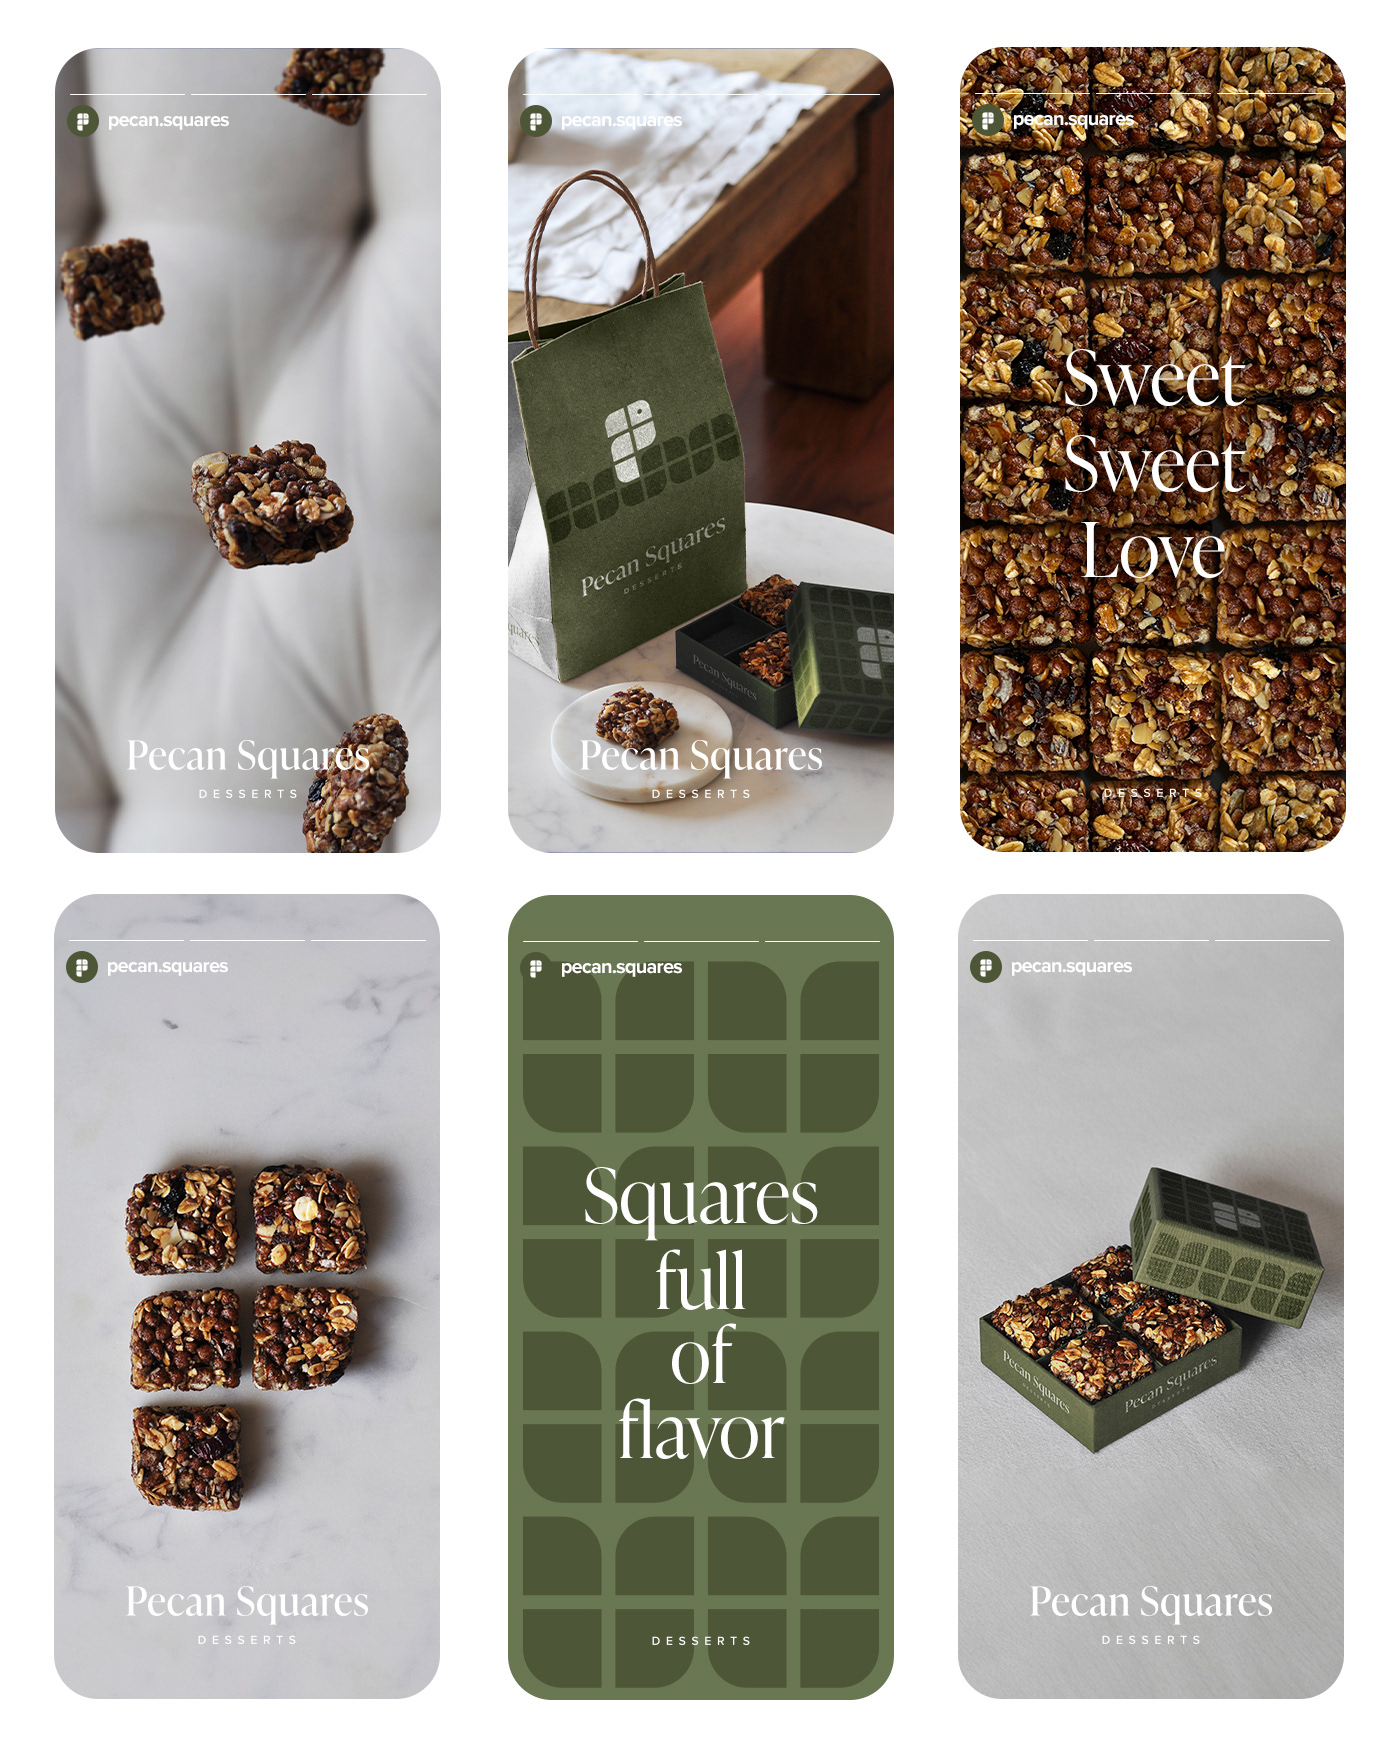 Pecan Square dessert stories design for social media platform Instagram